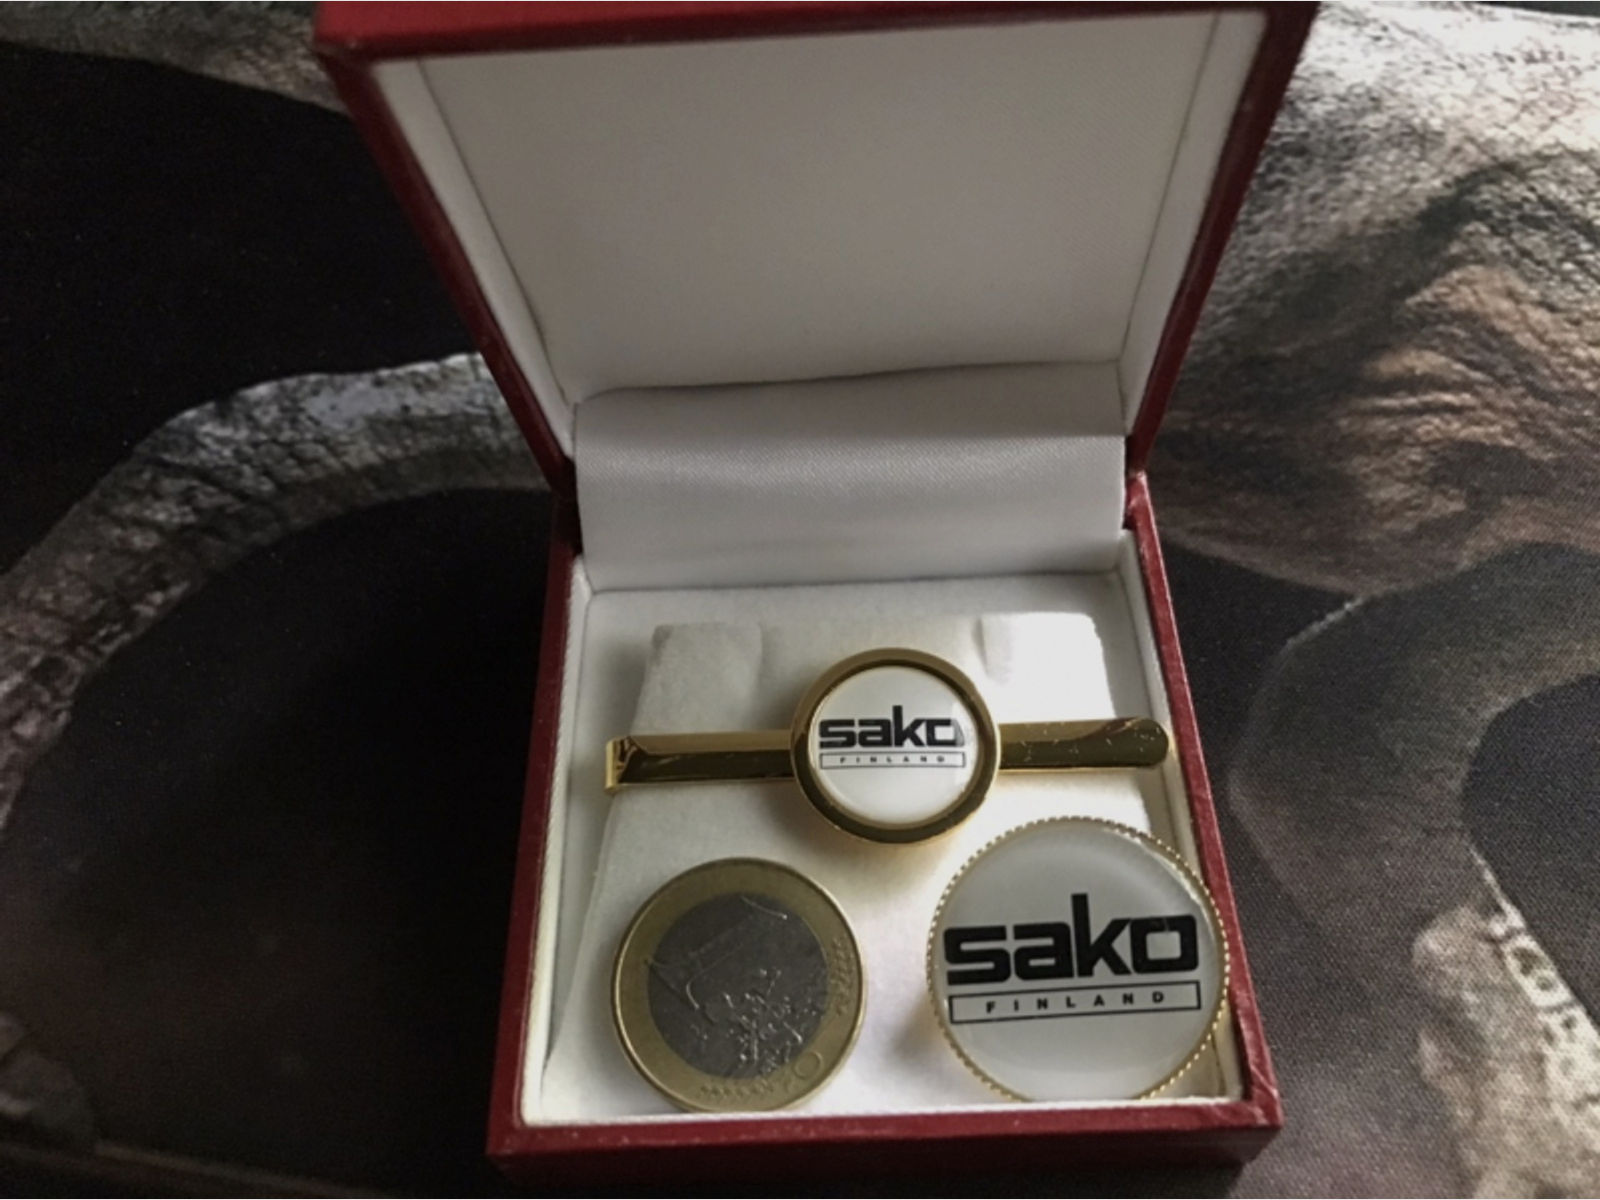 Set Krawattennadel/clip plus Pin, SAKO Finland, vergoldet